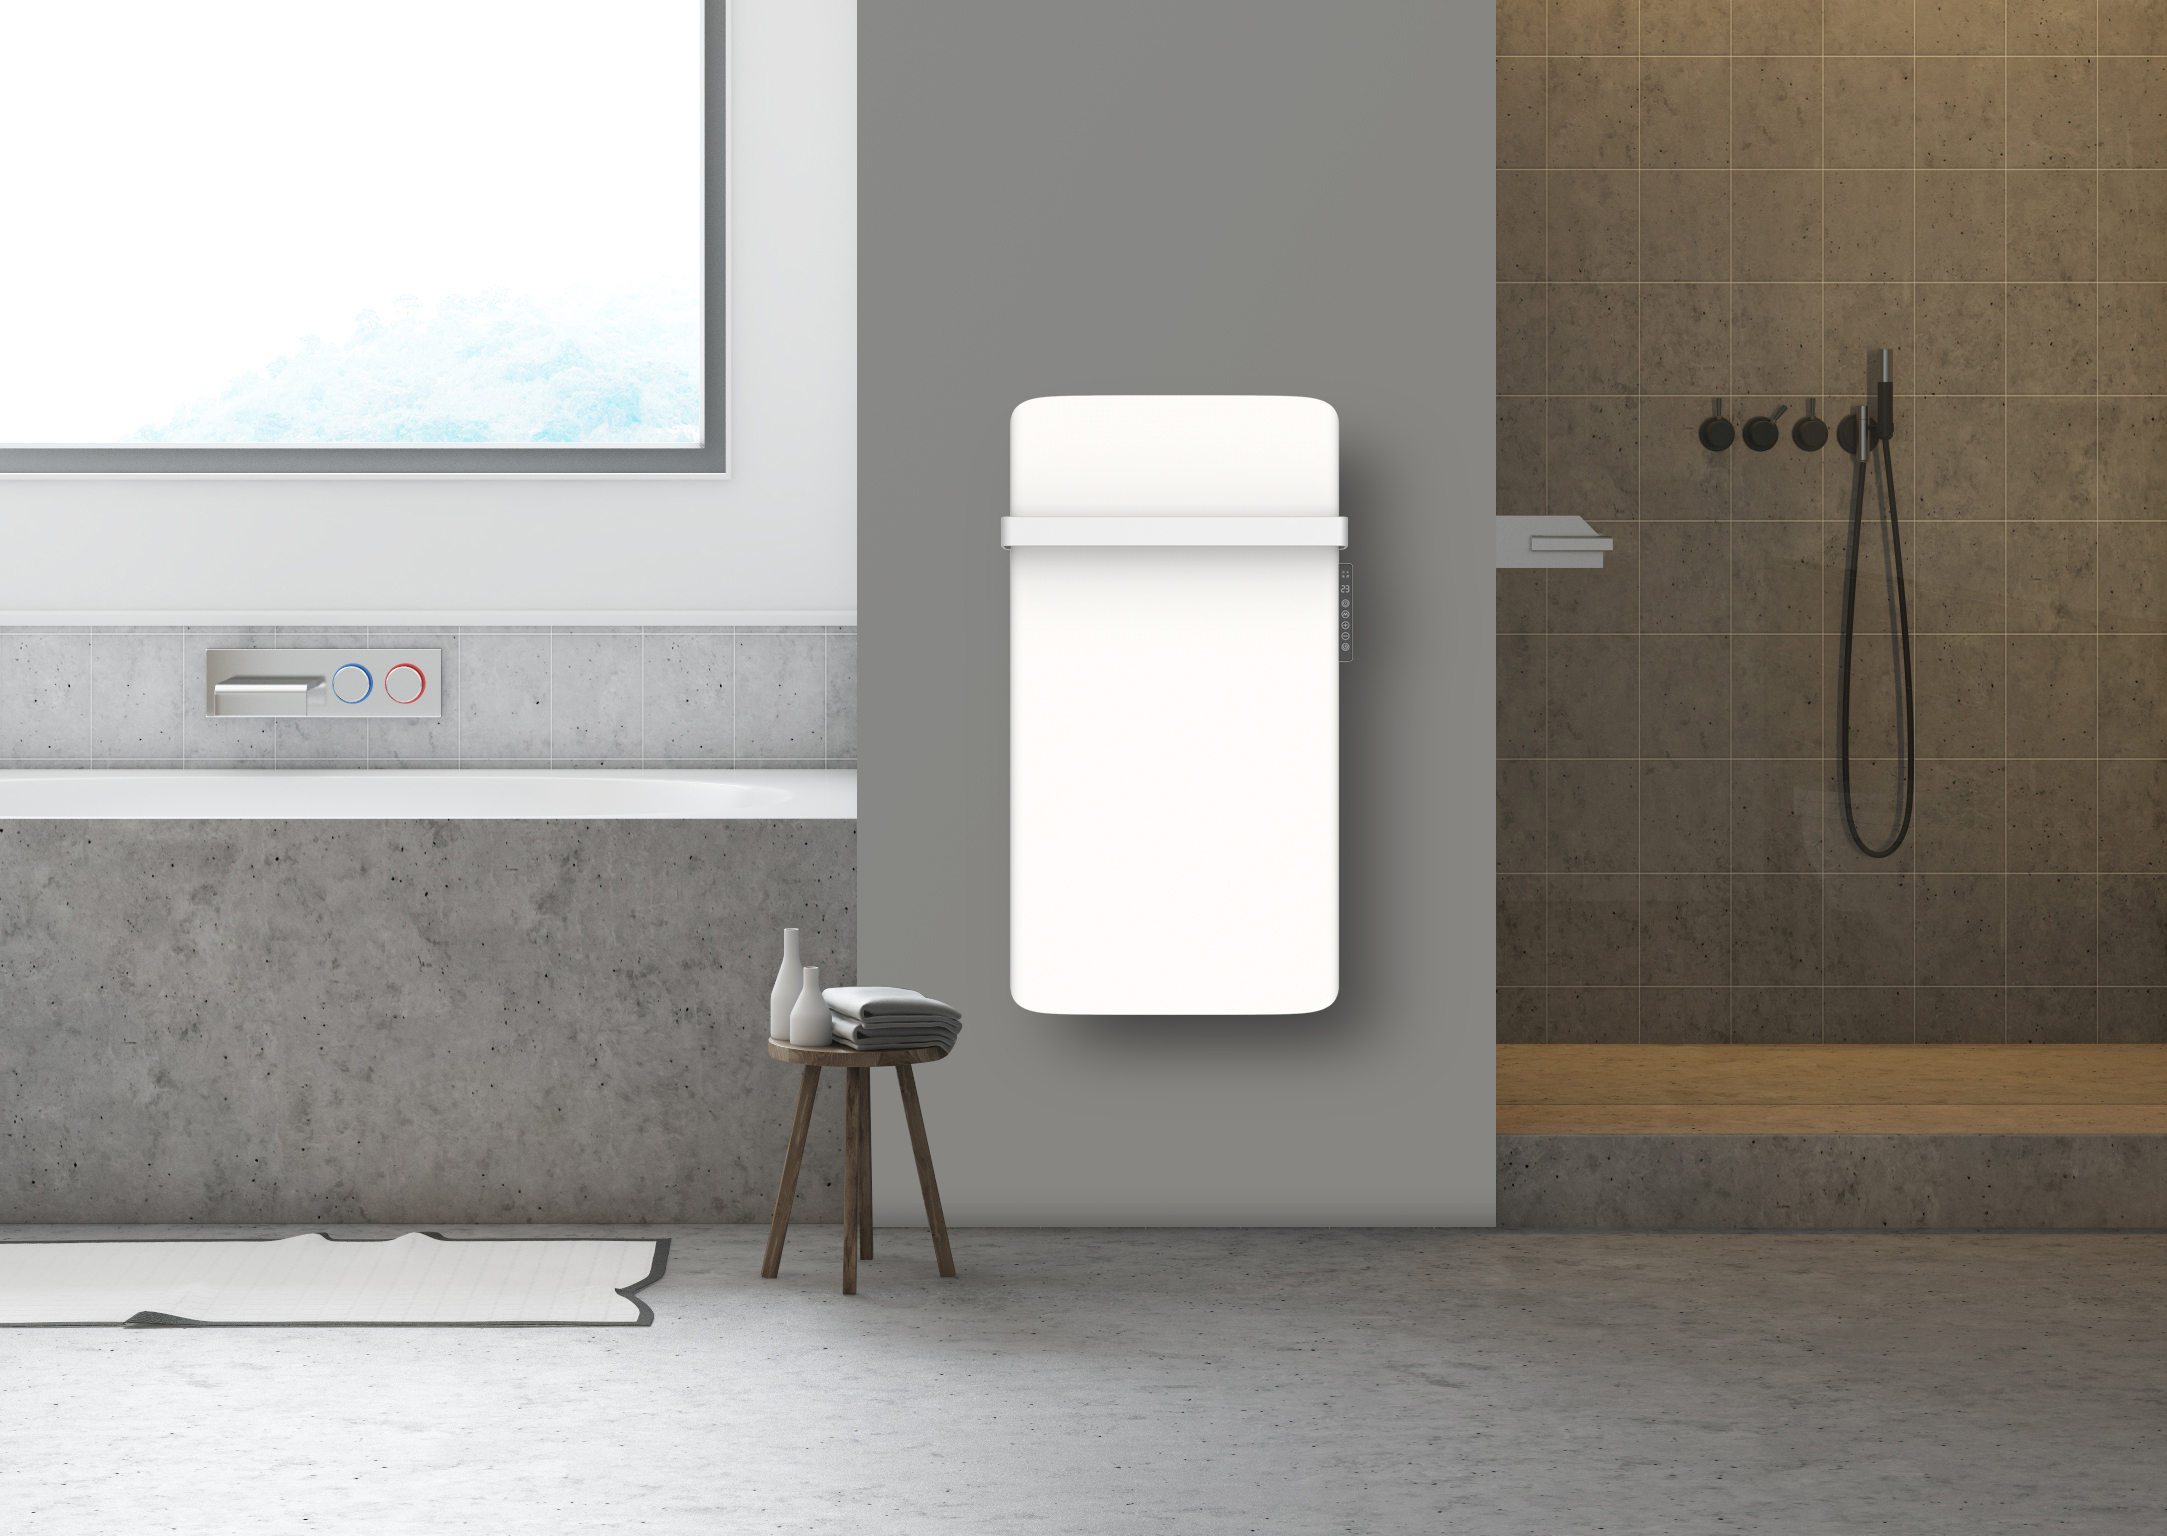 Panel Heater Vertical Radiator Bathroom Infrared Towel Warmer Slim Wall